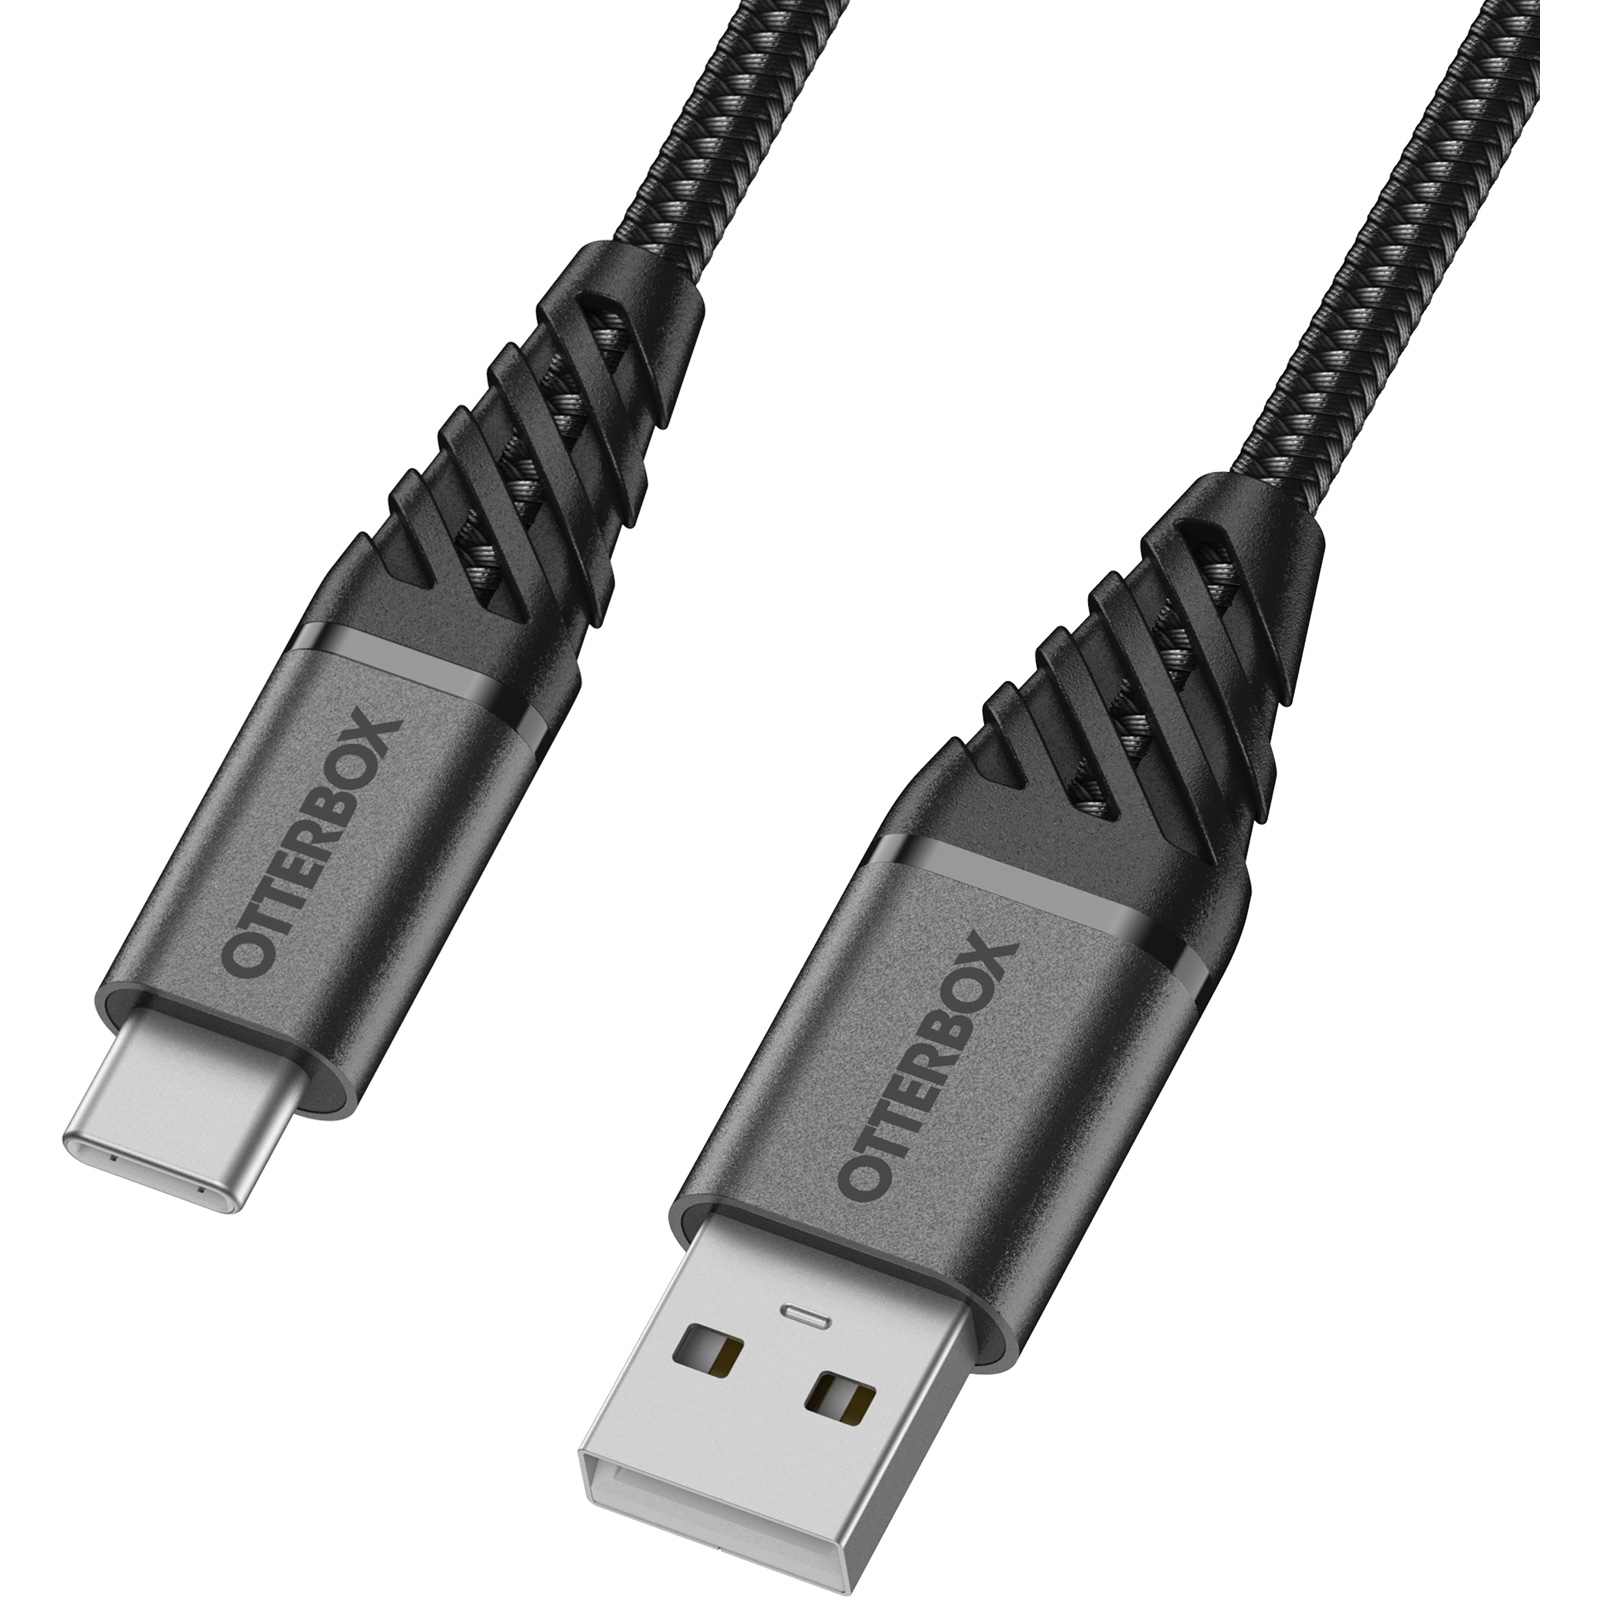 Cable USB Type A 2.0 à USB Type C rose 1m